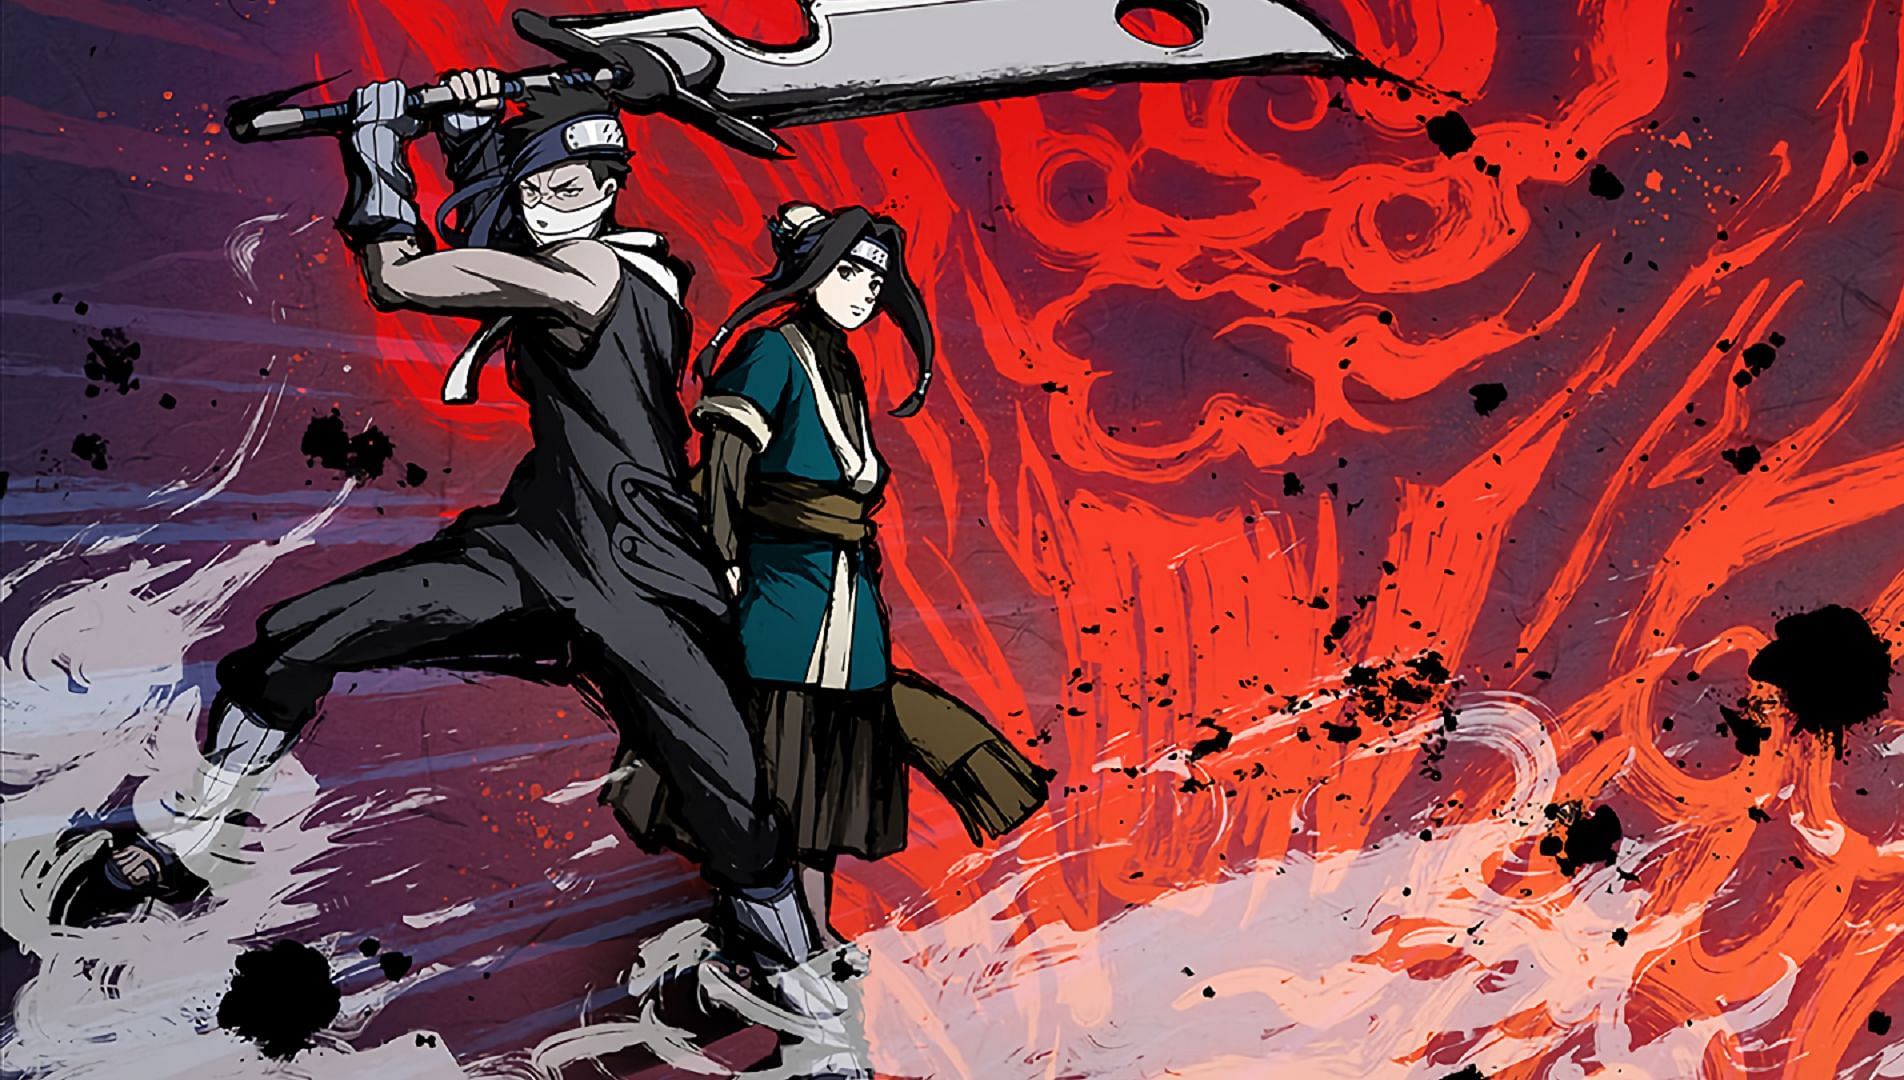 Zabuza and Haku are iconic antagonists, as well as dangerous ninjas (Image via Studio Pierrot, Naruto)